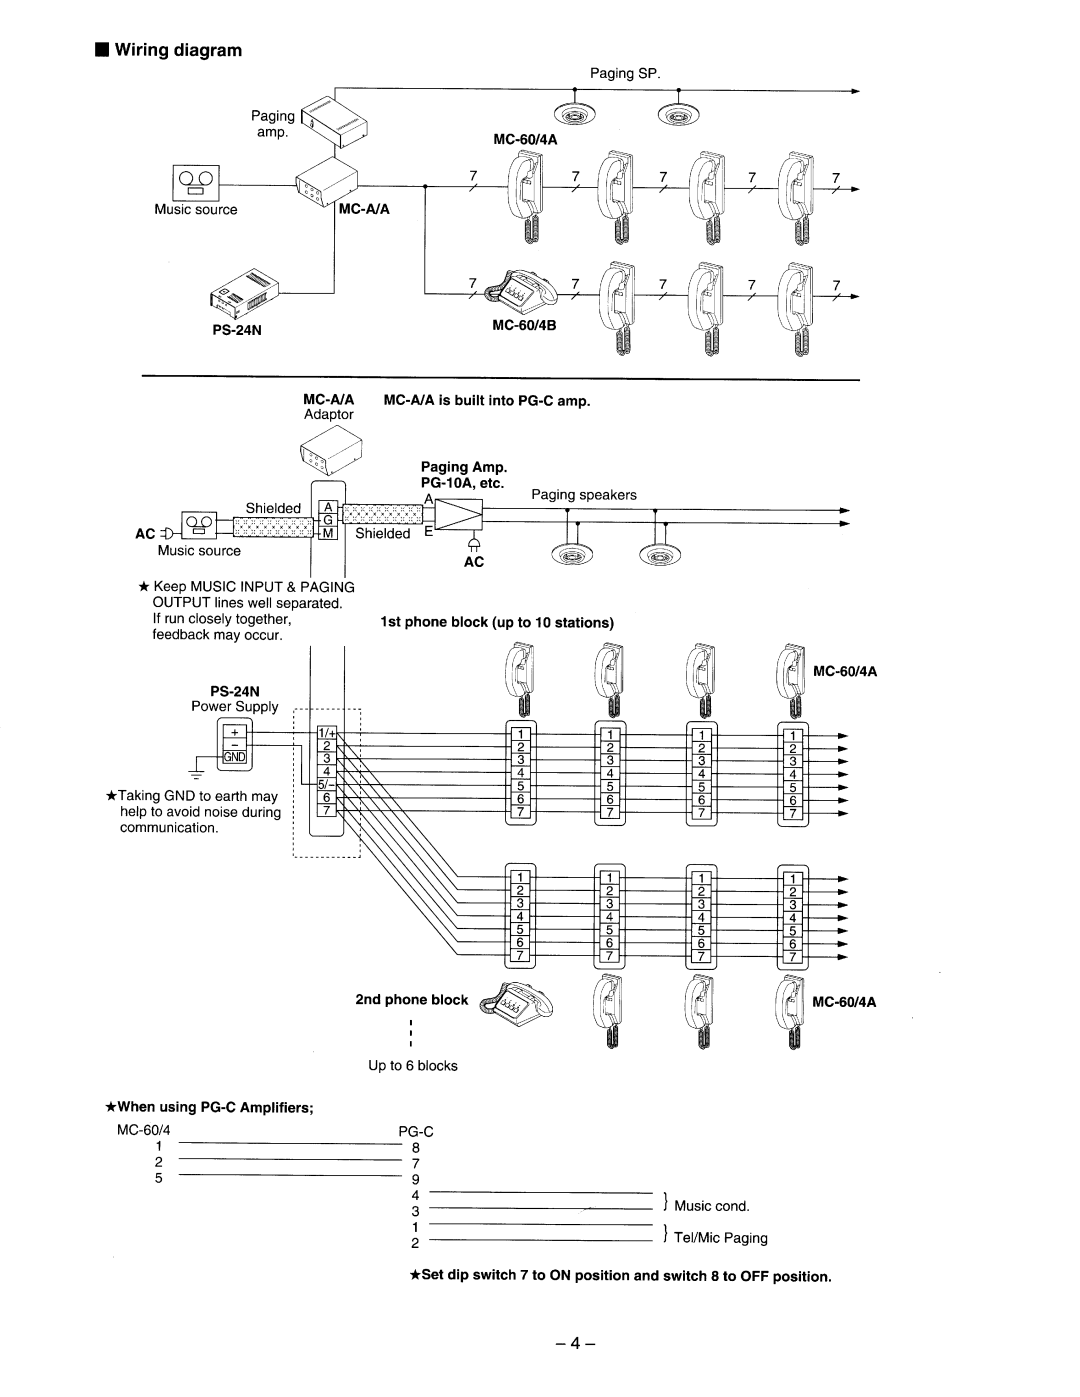 Aiphone MC-60/4A, MC-60/4B manual 